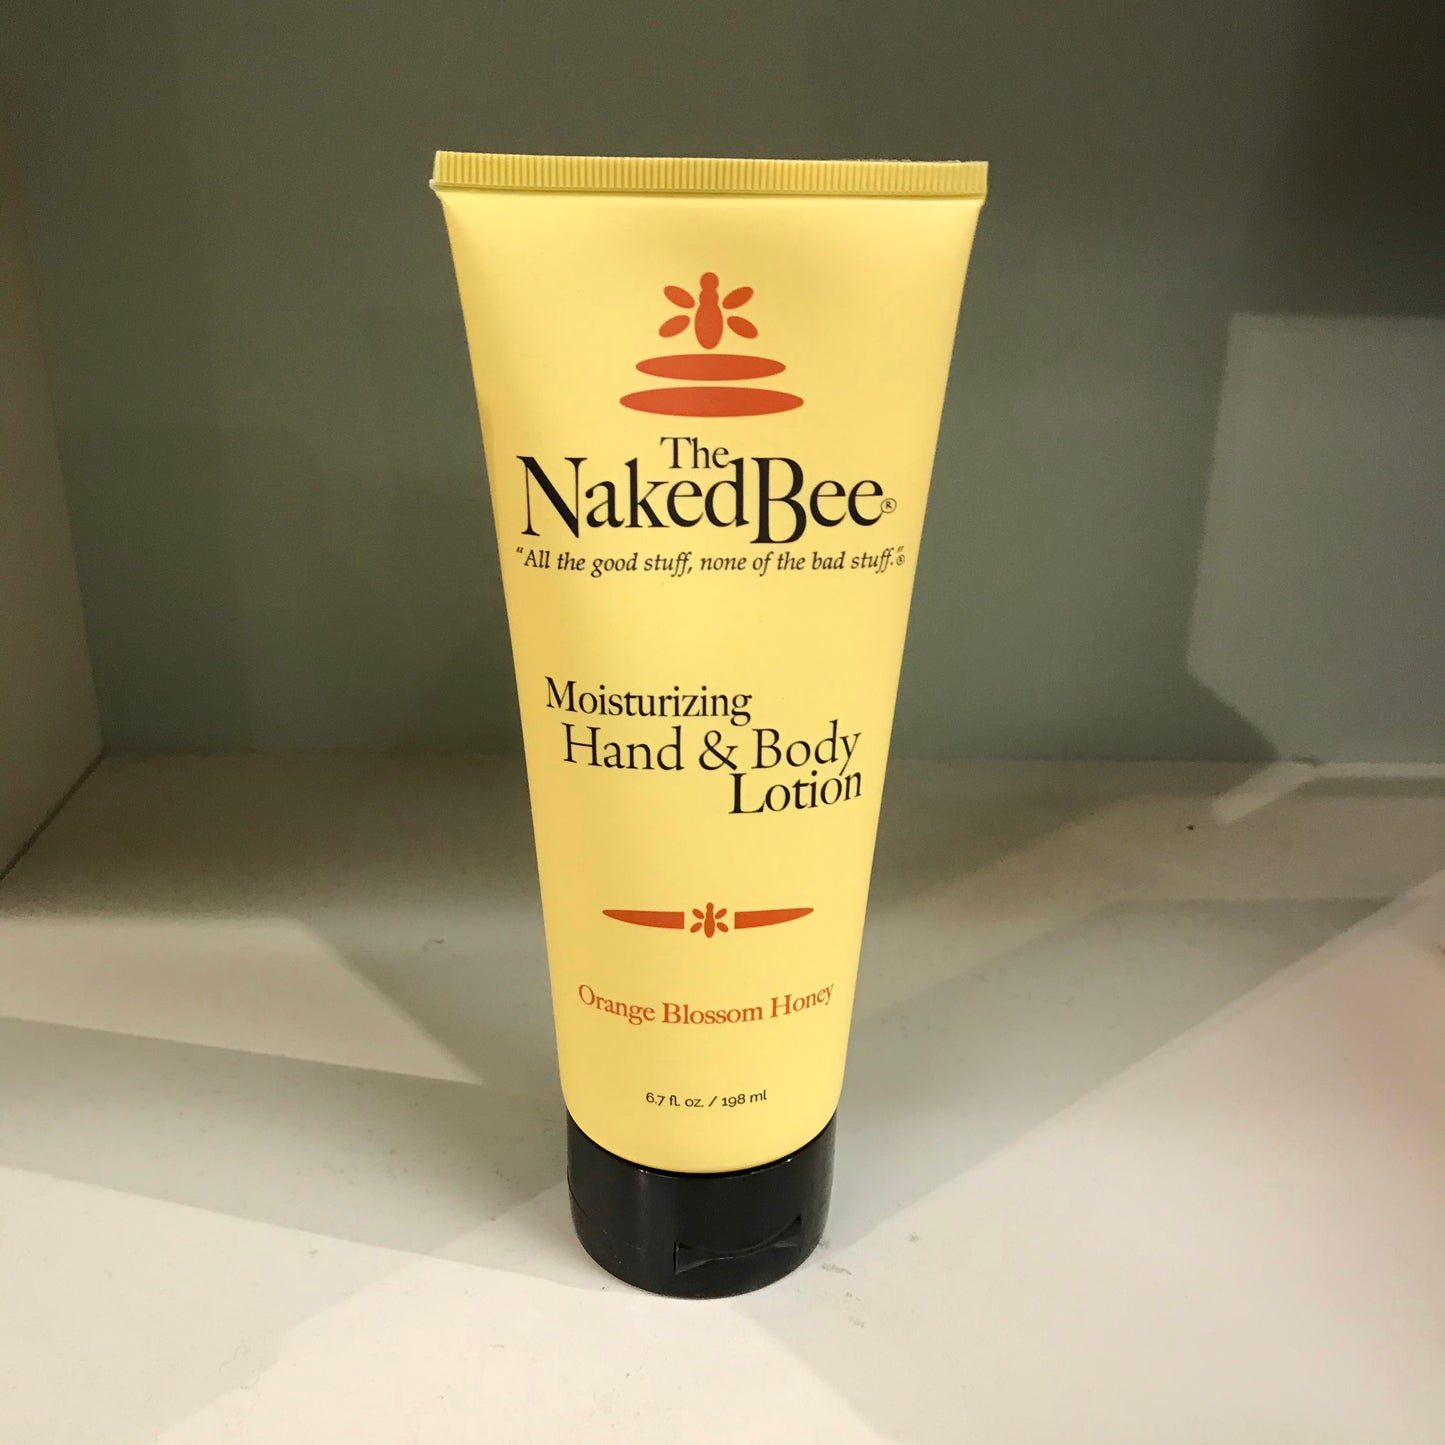 Naked Bee - Orange Blossom Honey Hand and Body Lotion - 6.7 fl. oz./198 ml